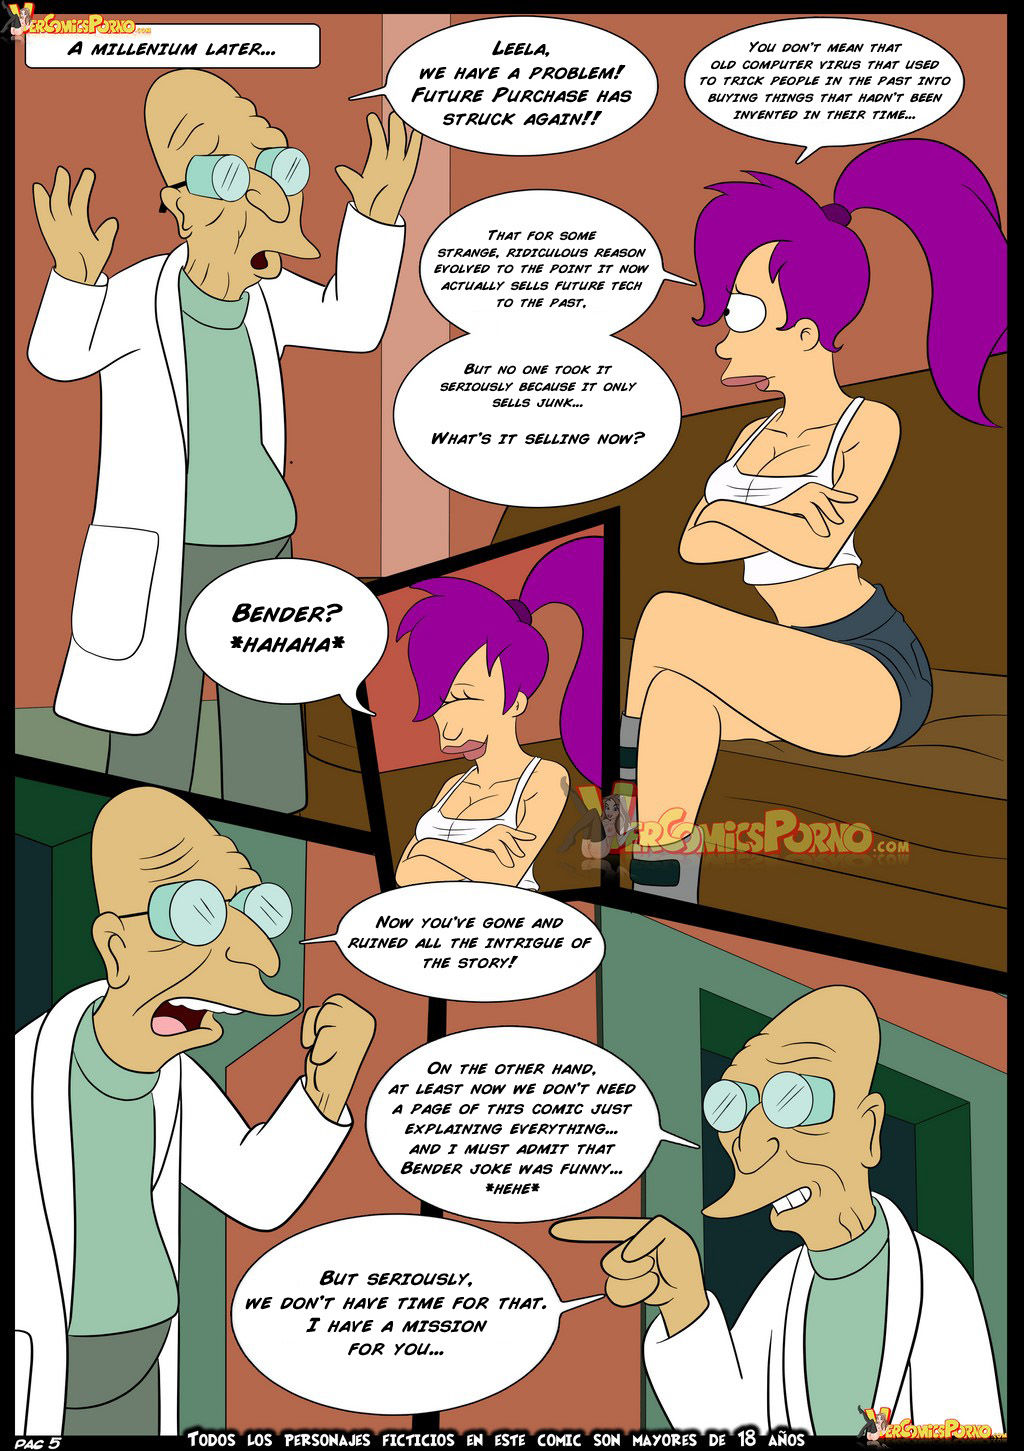 [CROC] The Simpsons / Futurama - Future purchase page 6